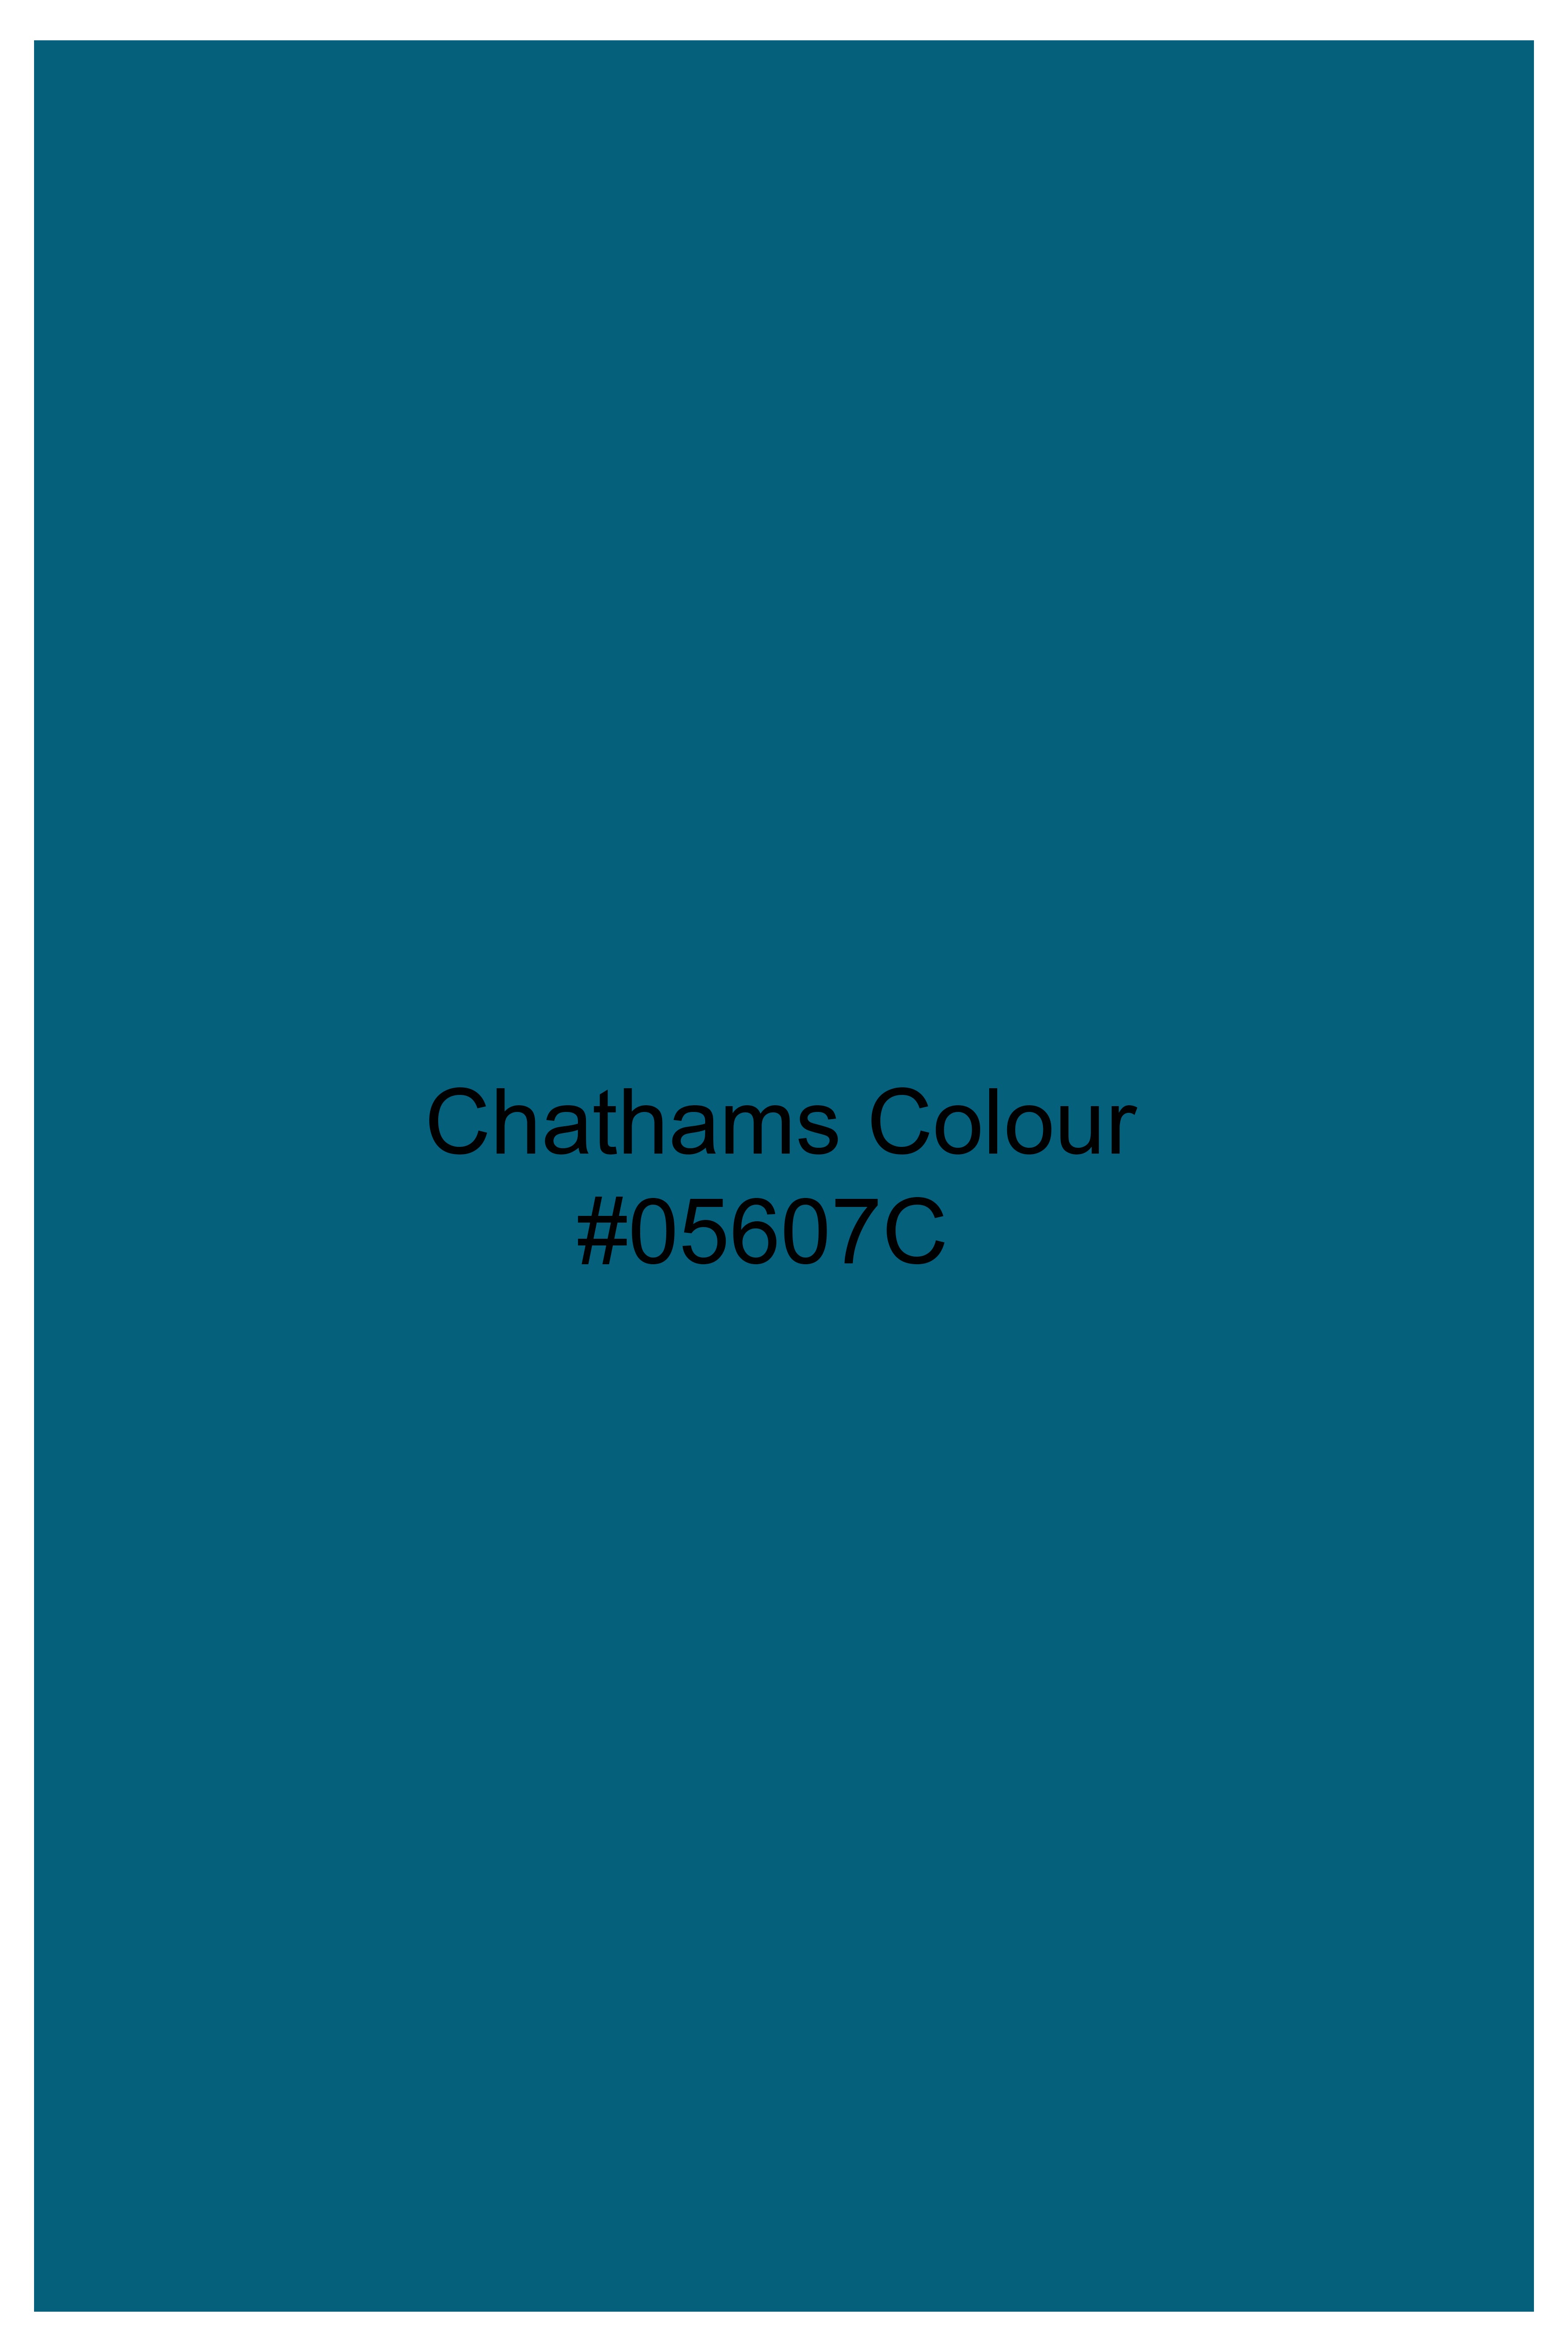 Chathams Blue and White Premium Cotton Pique Polo TS896-S, TS896-M, TS896-L, TS896-XL, TS896-XXL